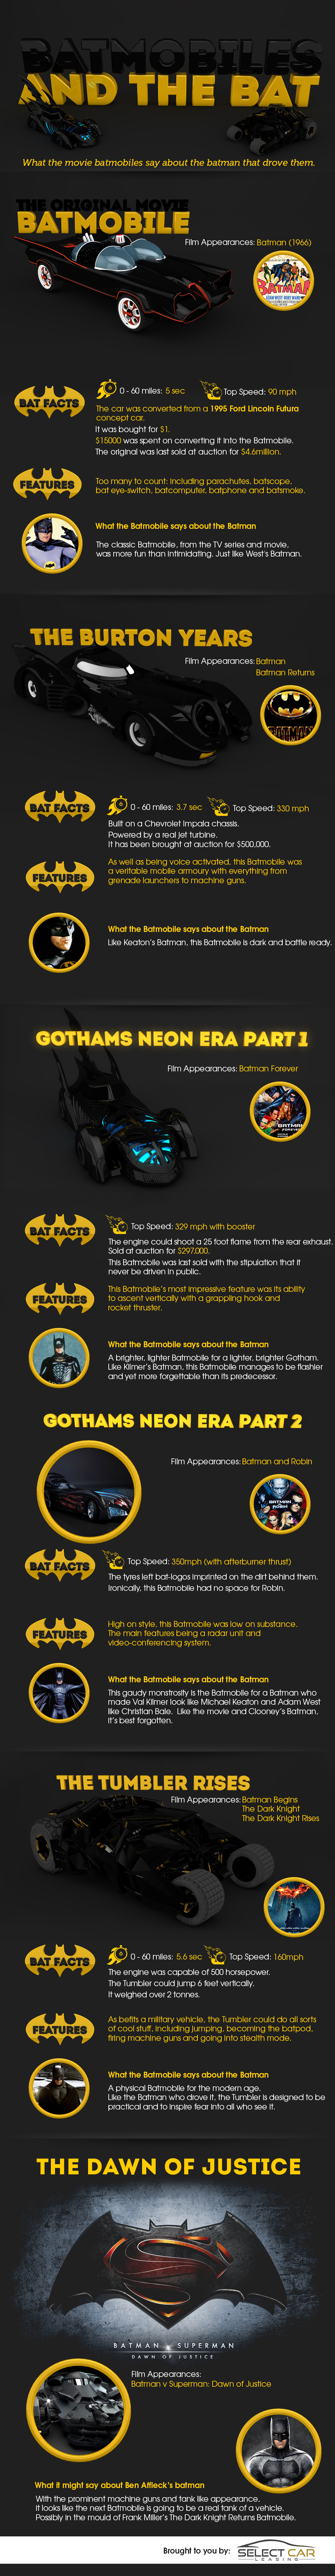 Batman infographic